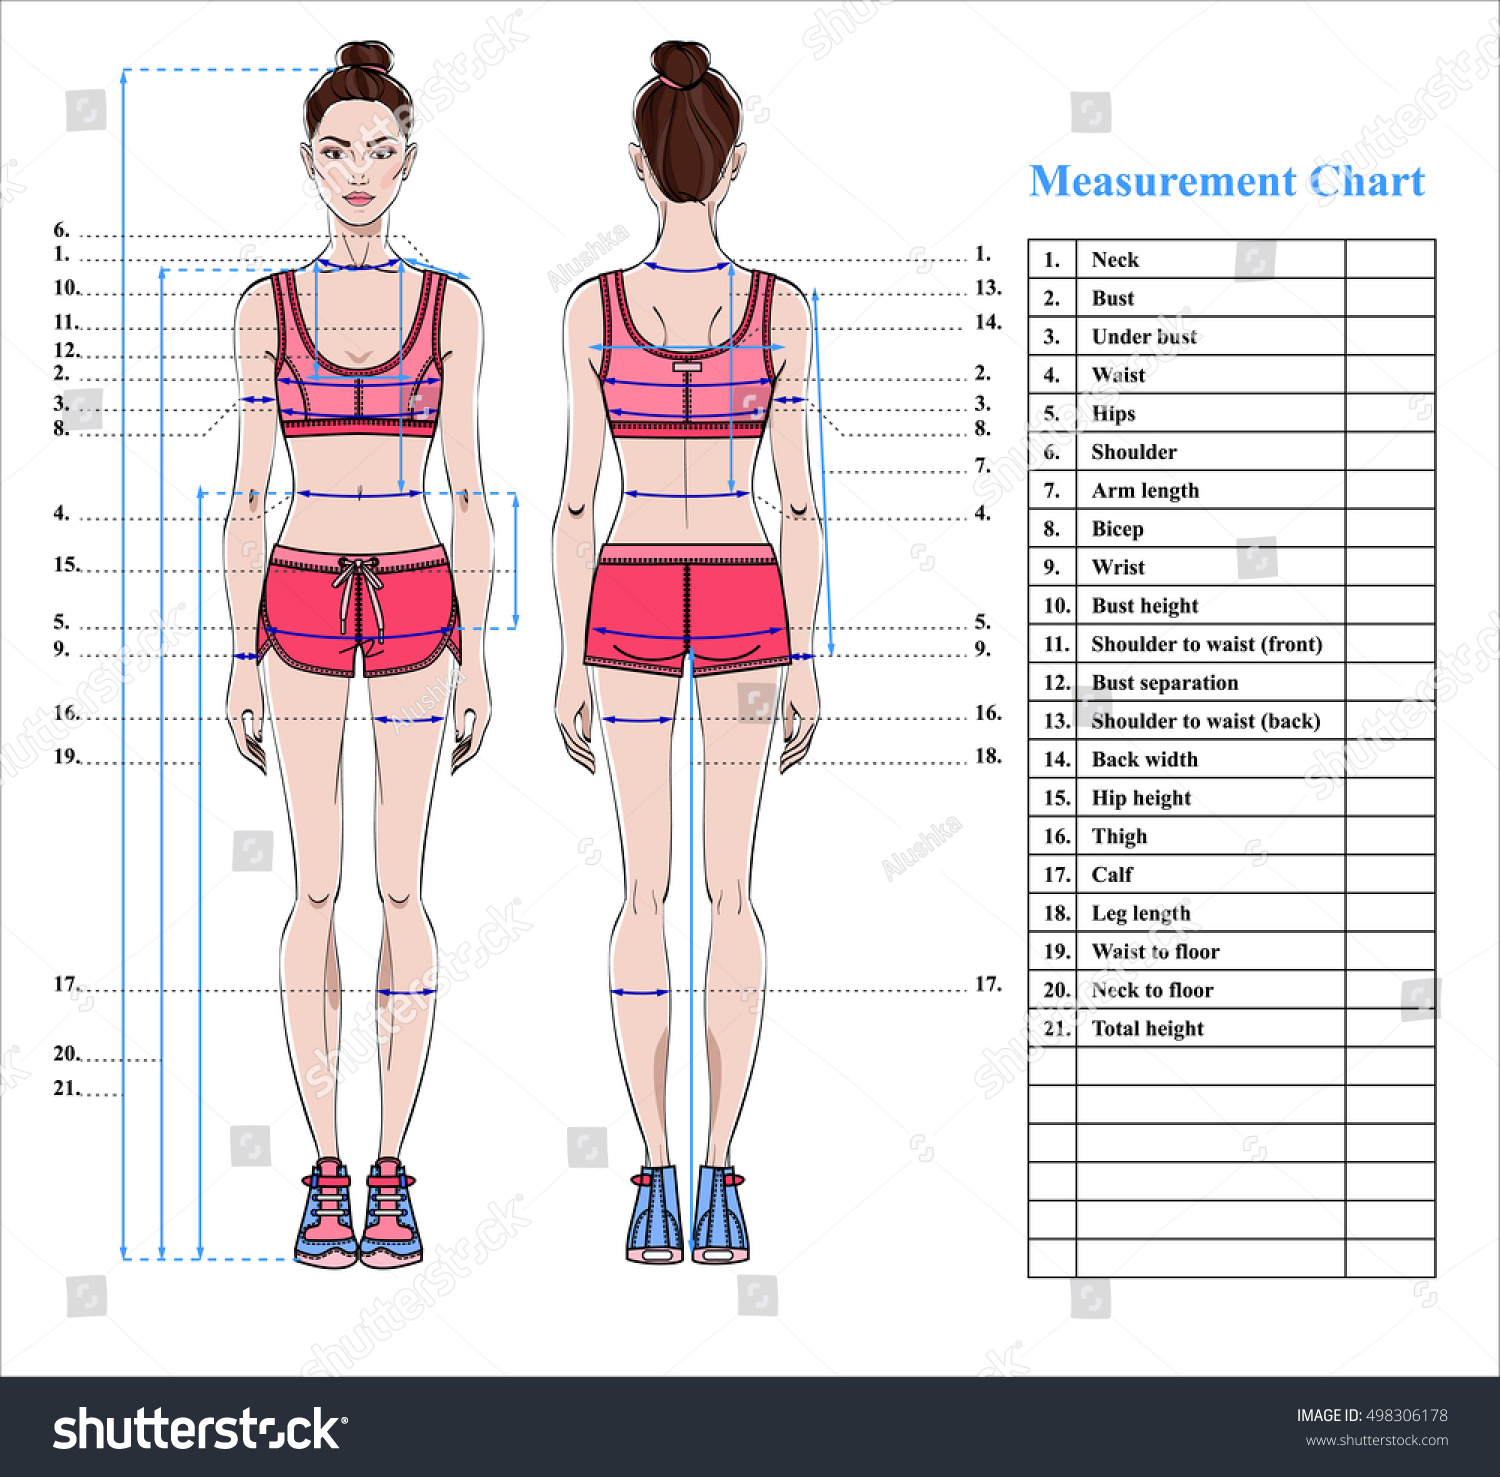 Basic Body Measurement Chart - Body Measurement Info